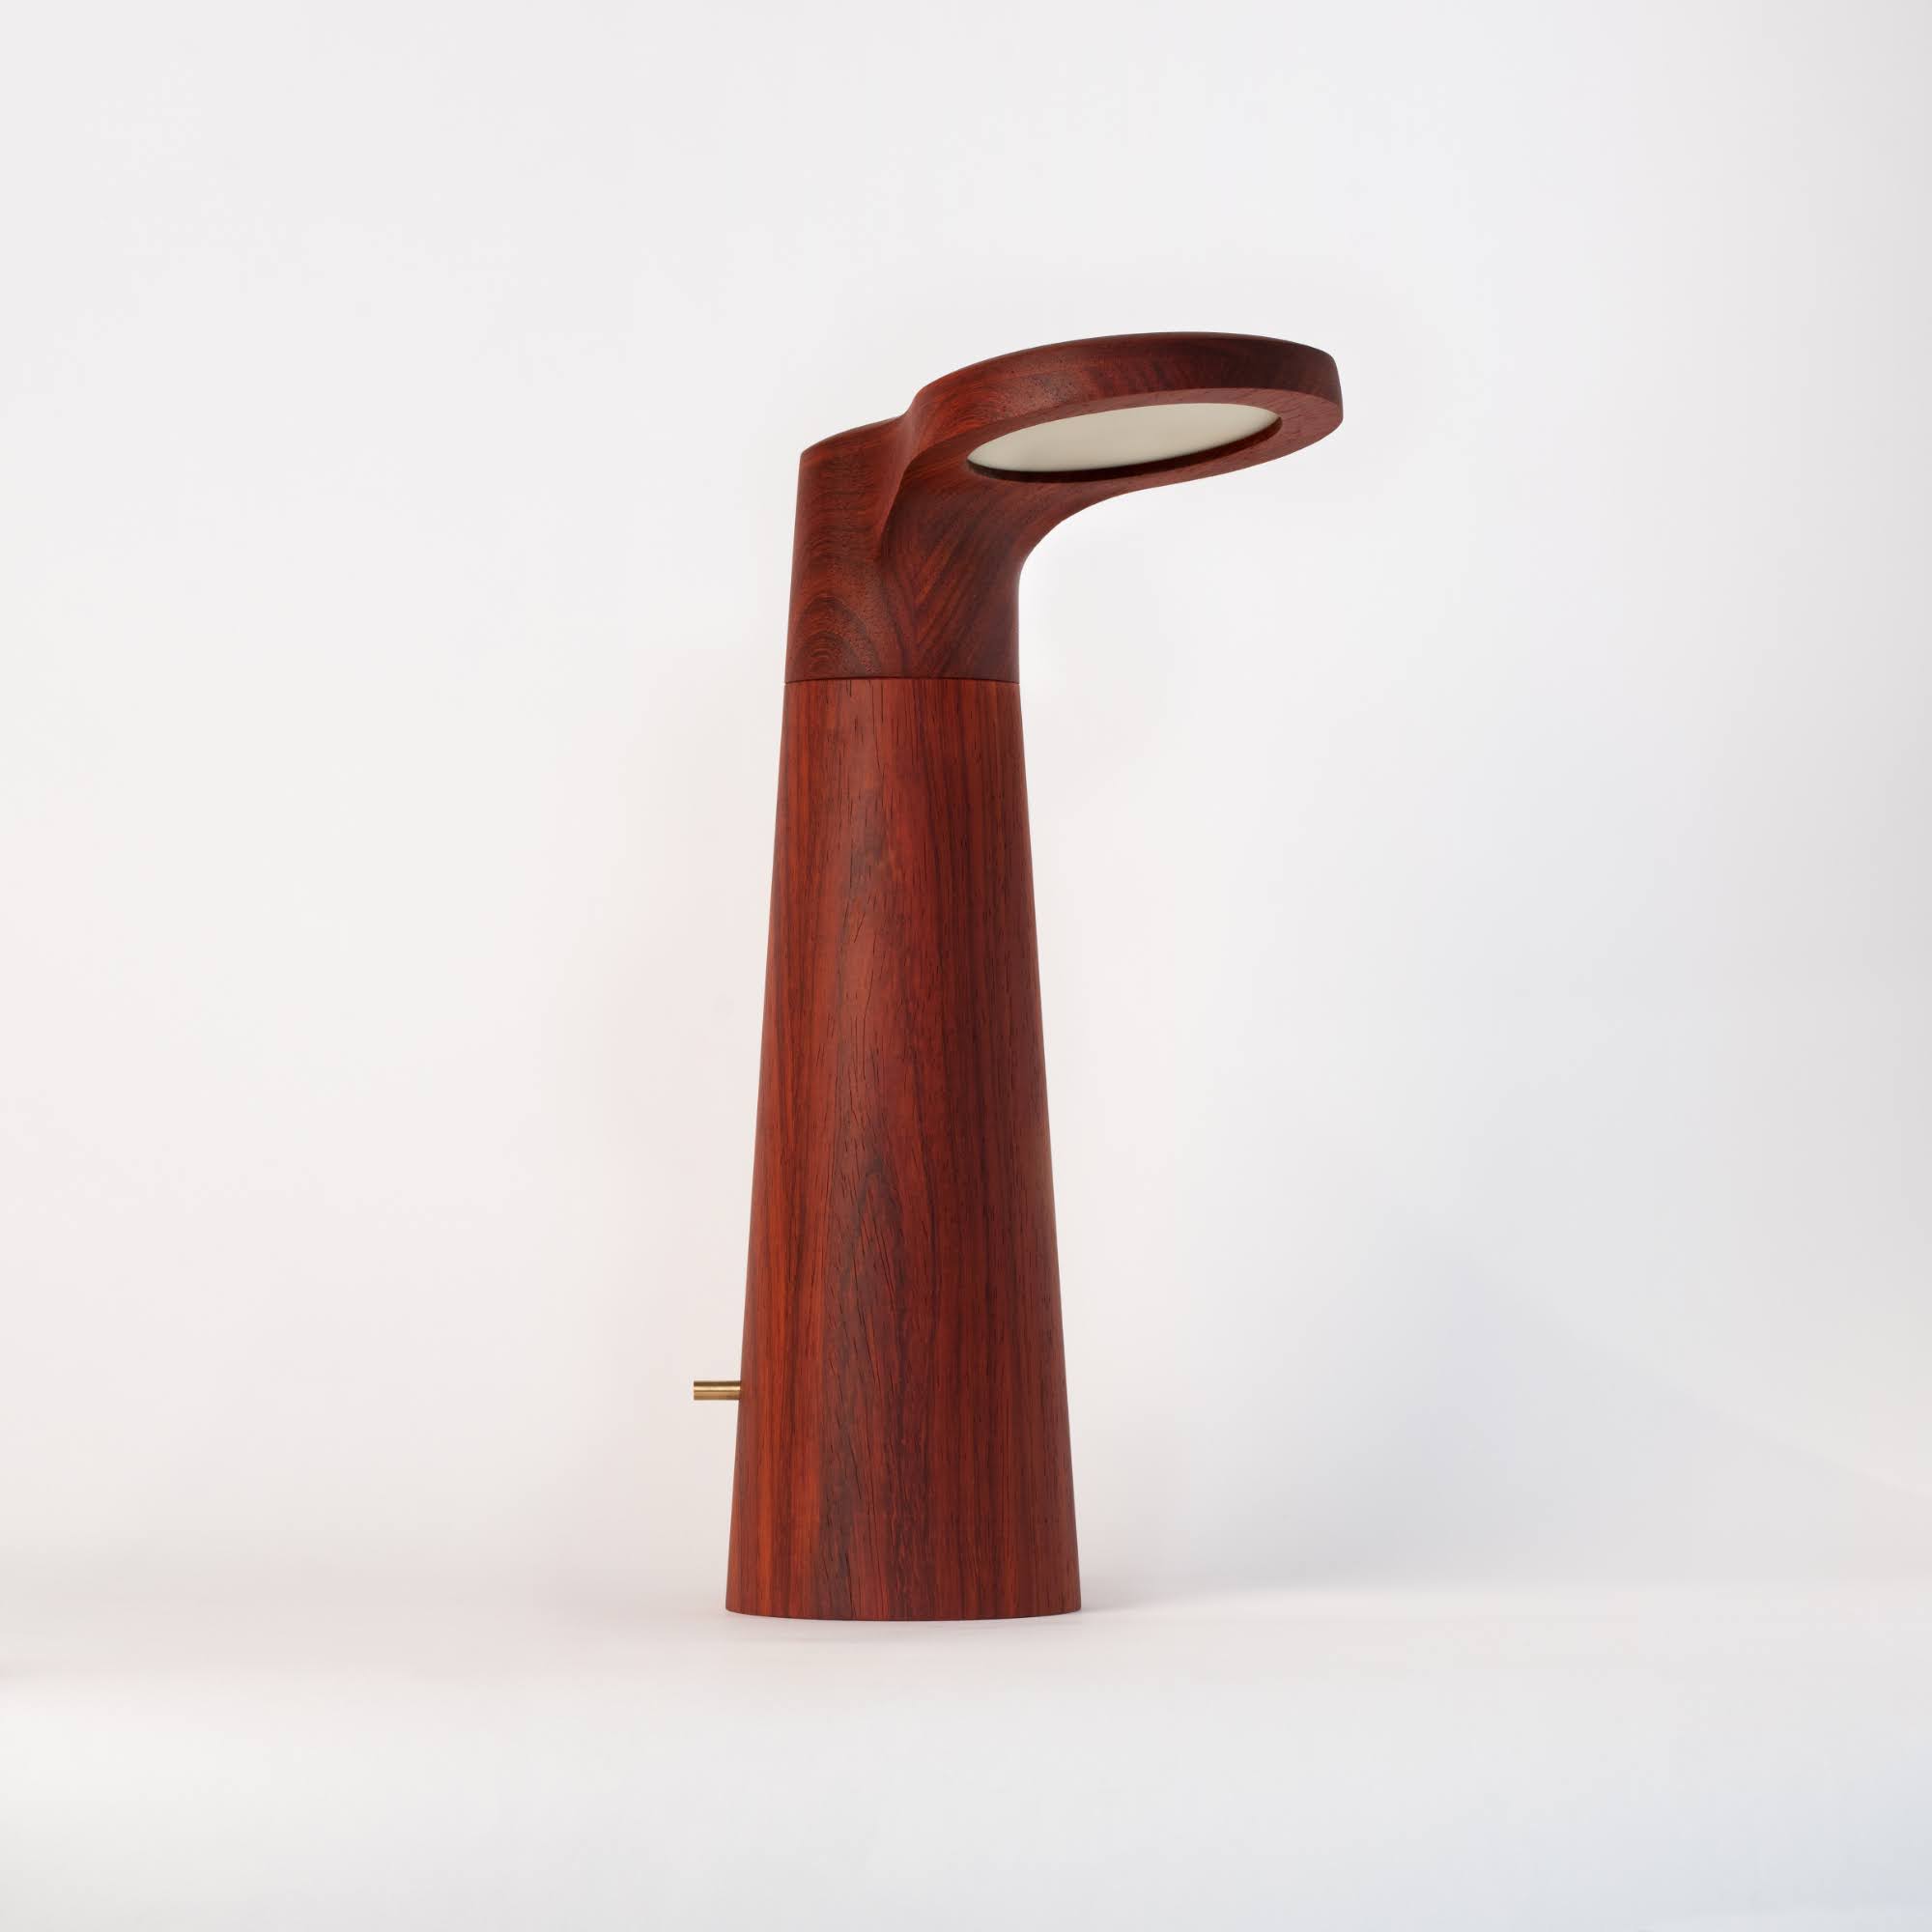 studio lamp by Isato Prugger | OLEDWorks